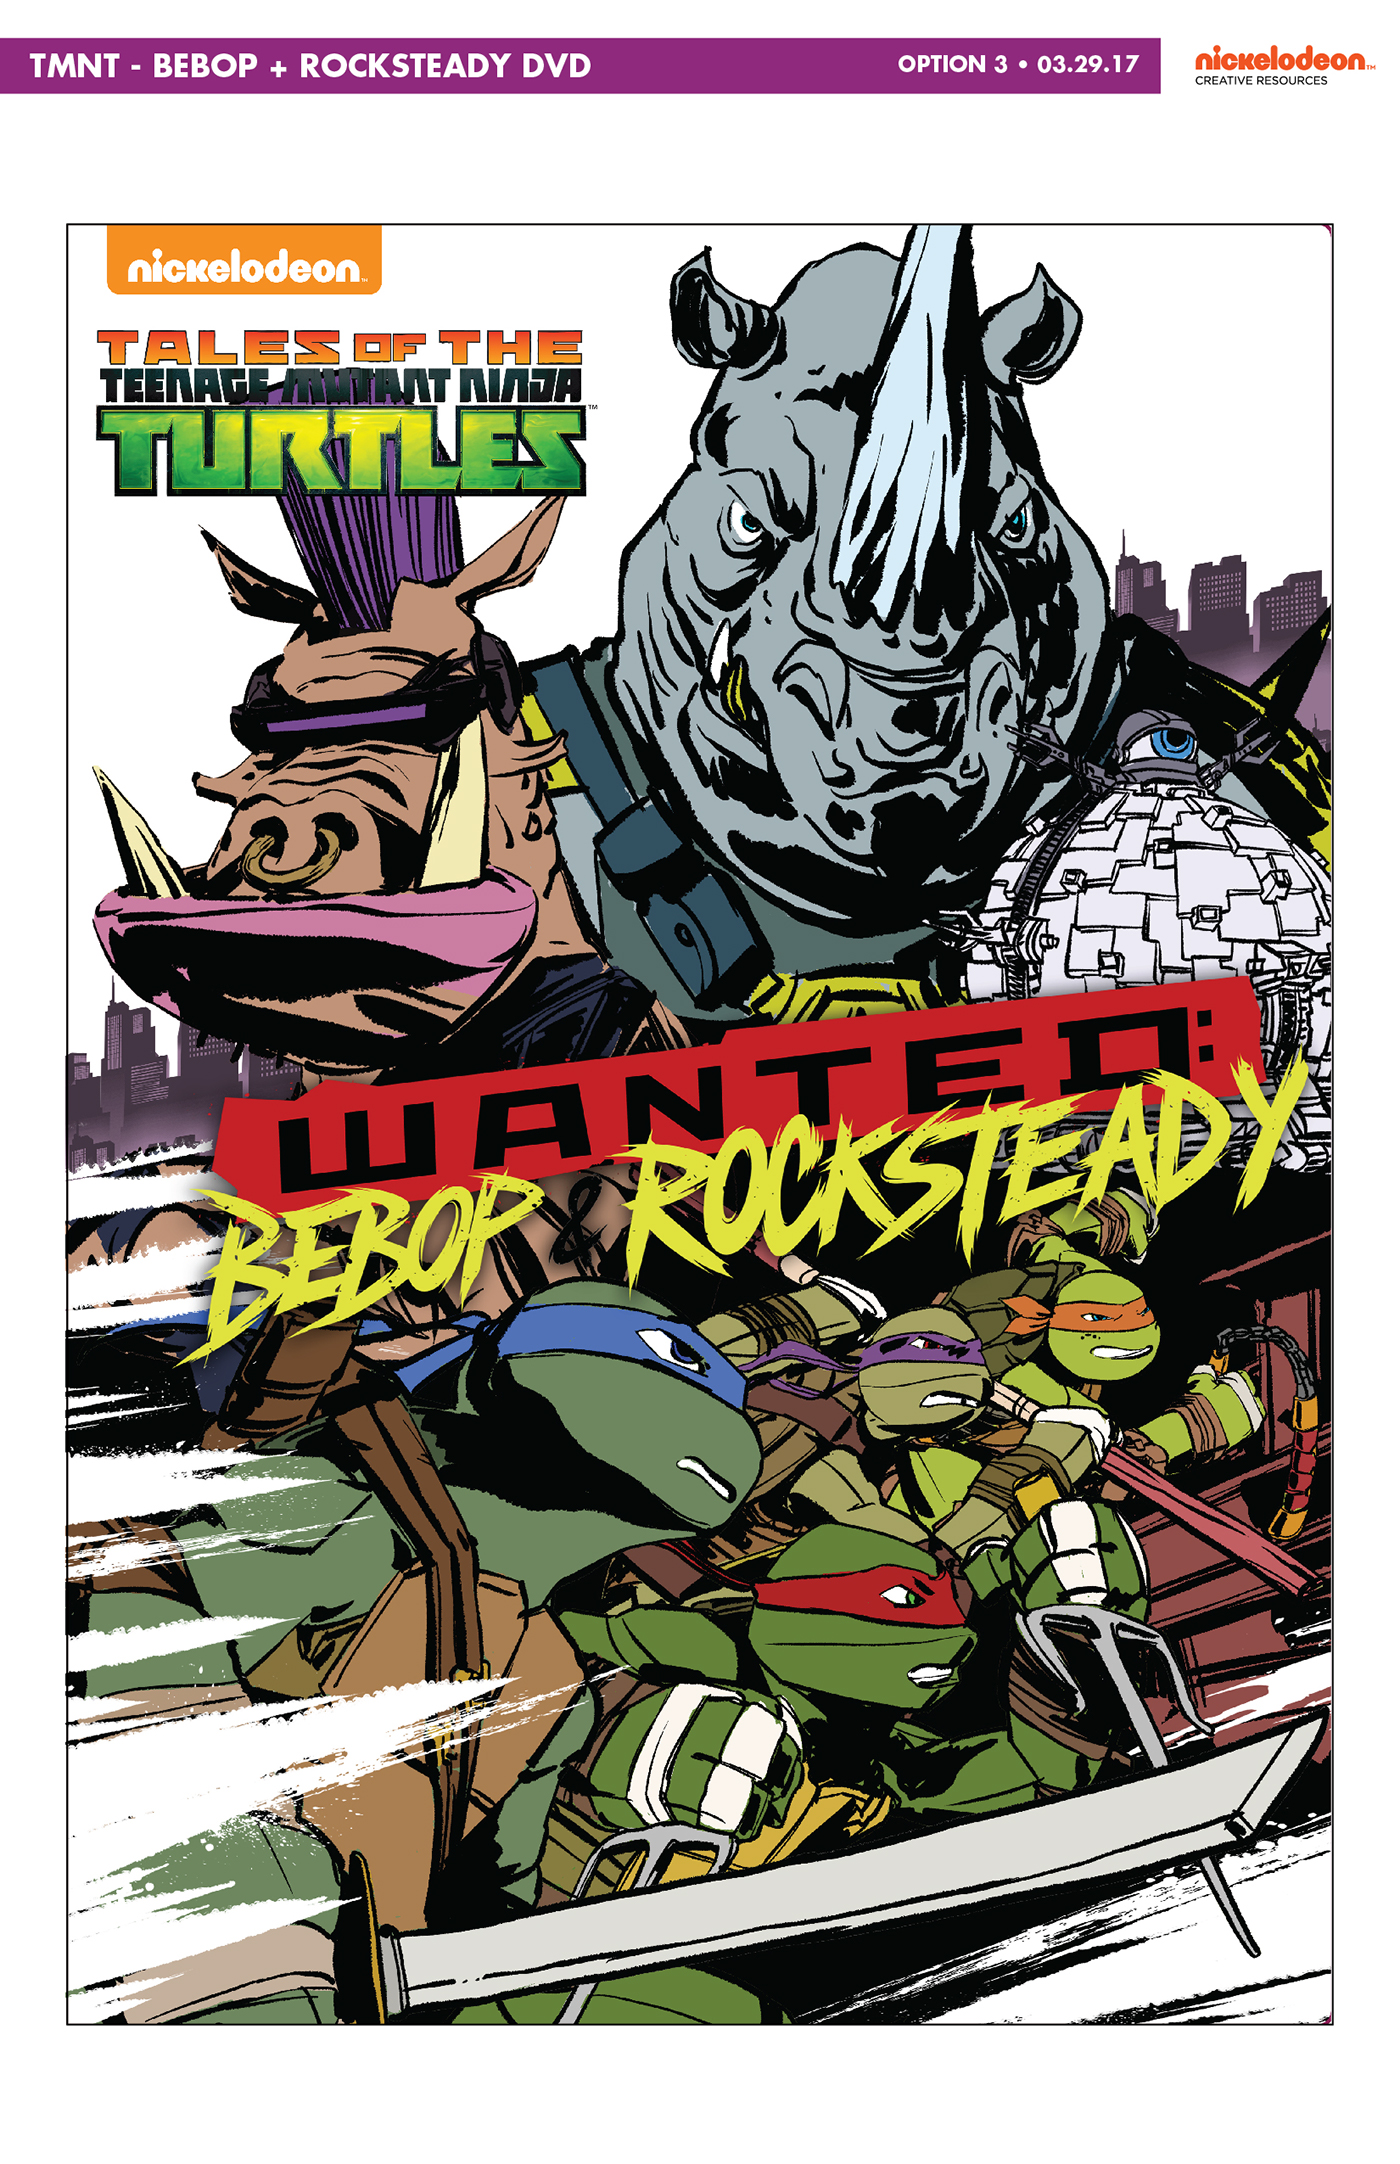 TMNT bebop Rocksteady ice cream kitty DVD Teenage Mutant Ninja Turtles nickelodeon SDCC